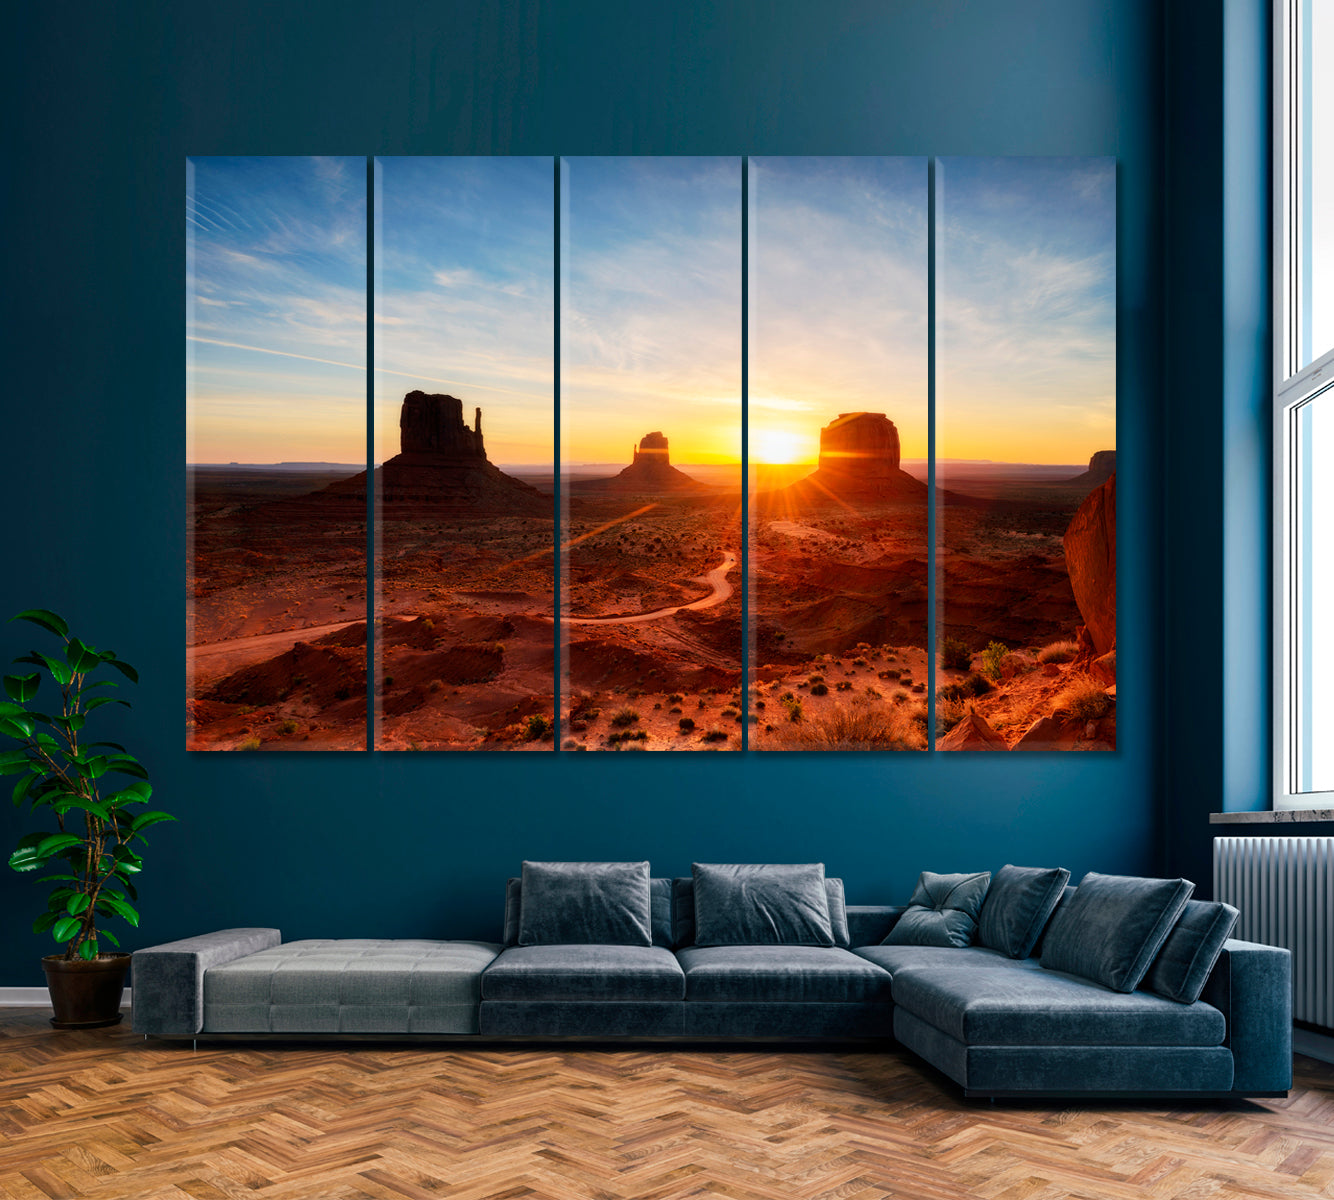 Monument Valley Navajo Tribal Park Arizona USA Canvas Print ArtLexy 5 Panels 36"x24" inches 